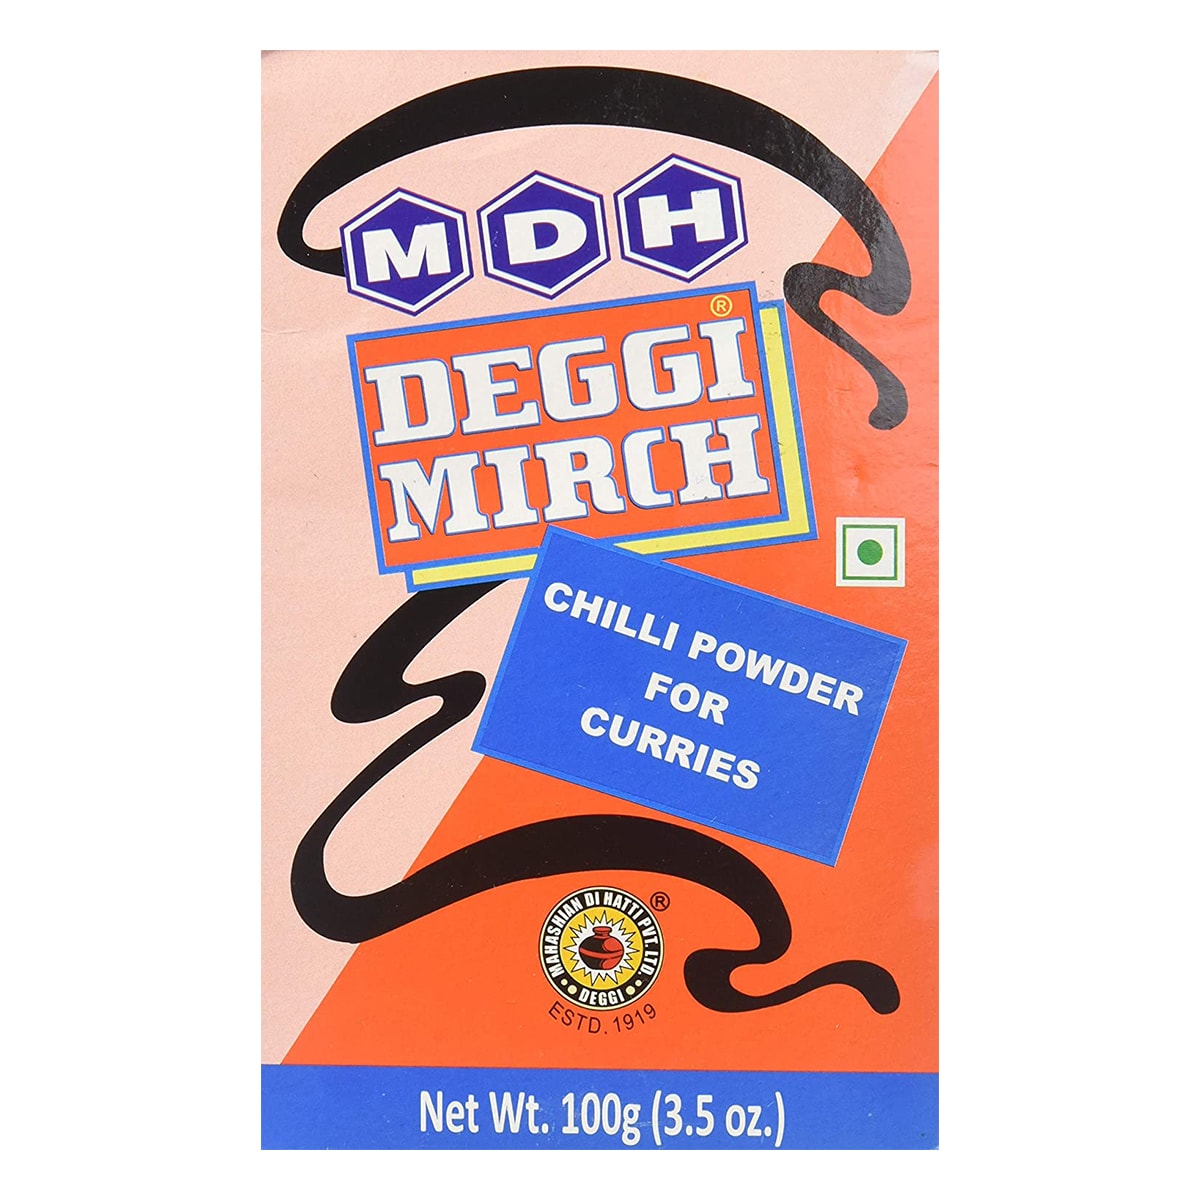 Buy MDH Deggi Mirch (Chilli Powder for Curries) - 100 gm